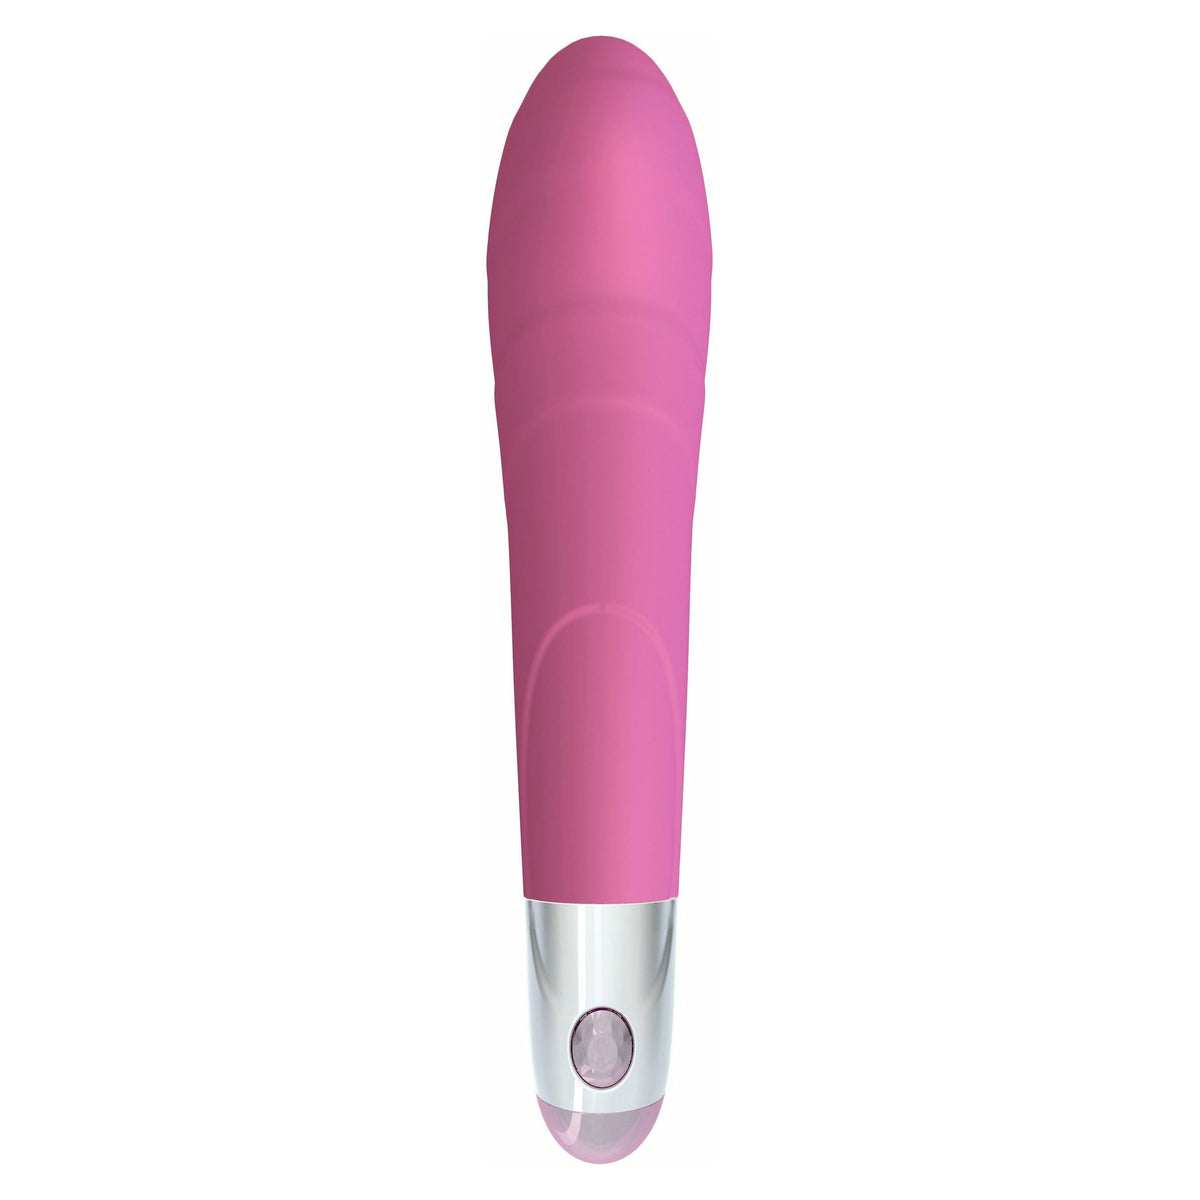 Mae B Lovely Vibes - G-Spot Vibrator - Pink